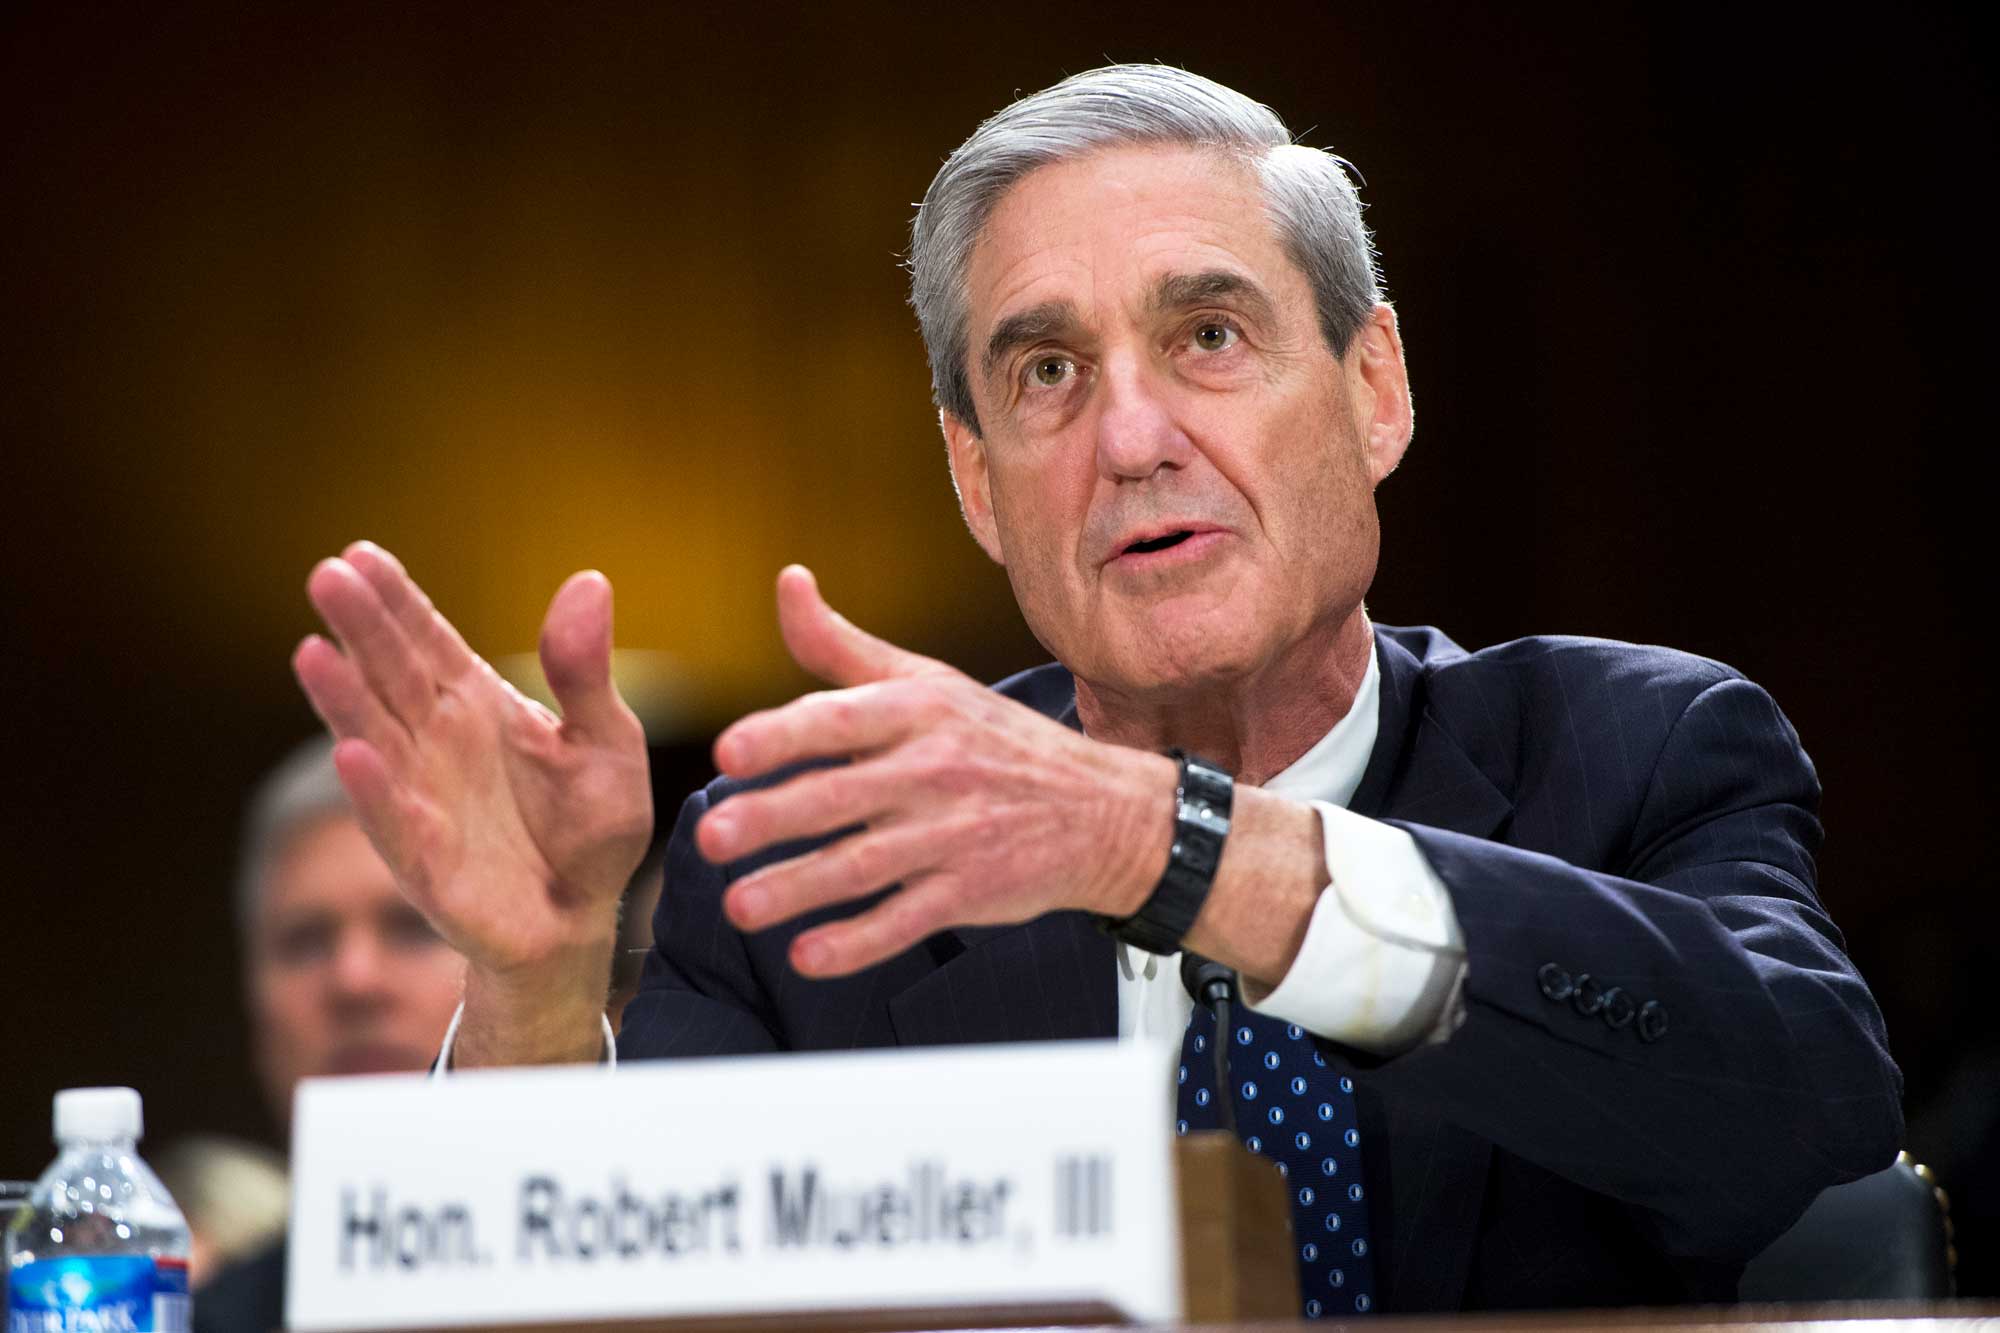 Lawyers defending company over subpoena in possible Mueller probe